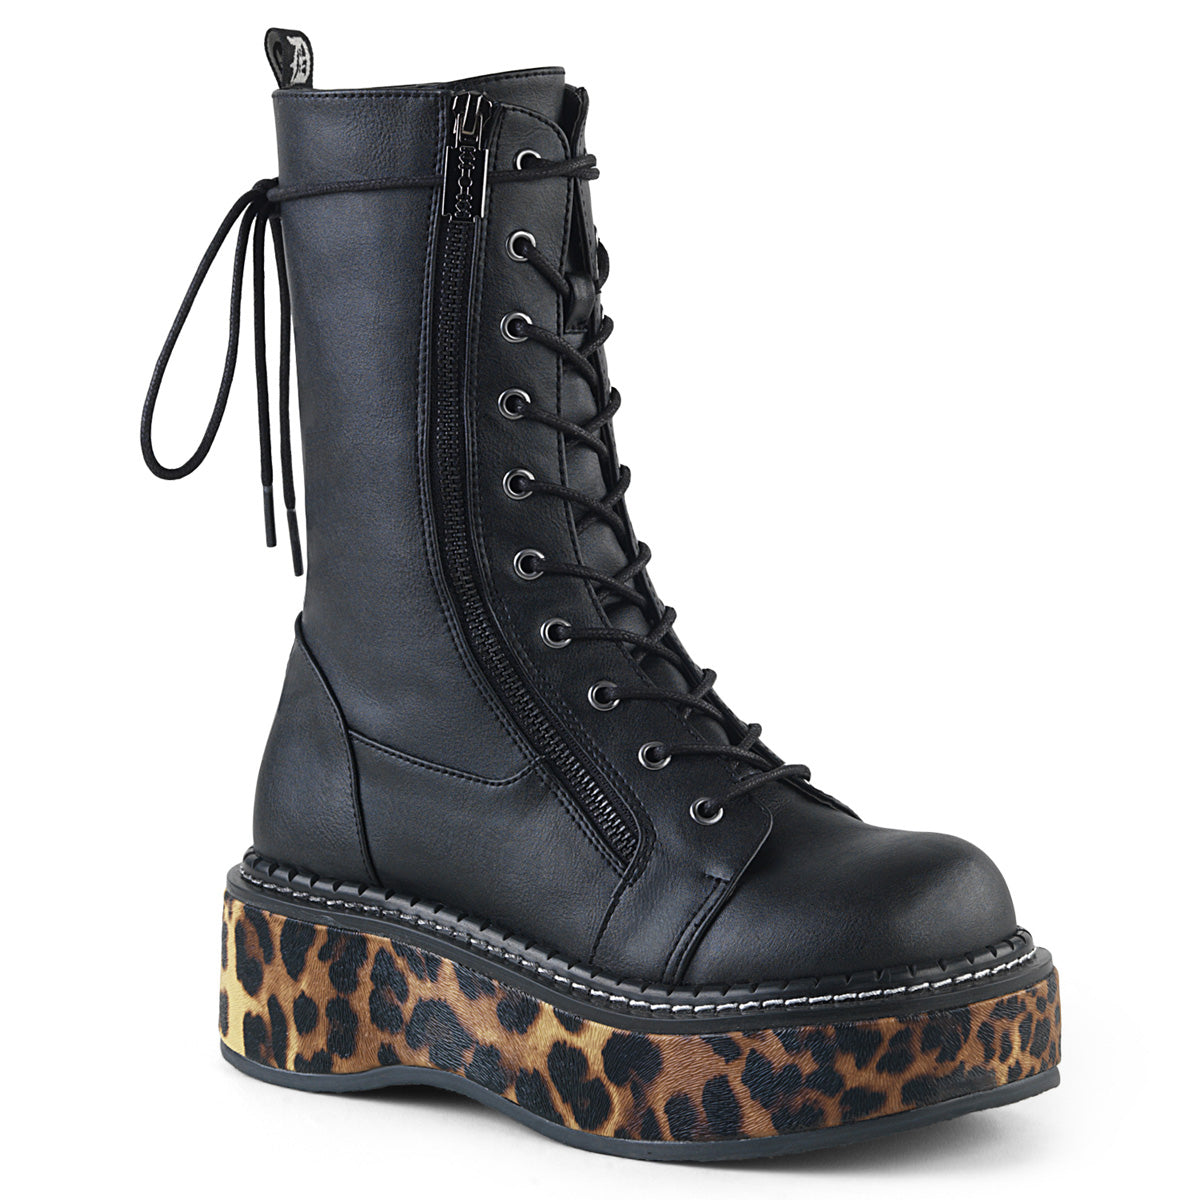 EMILY-350 Alternative Footwear Demonia Women's Mid-Calf & Knee High Boots Blk-Leopard Print Vegan Leather